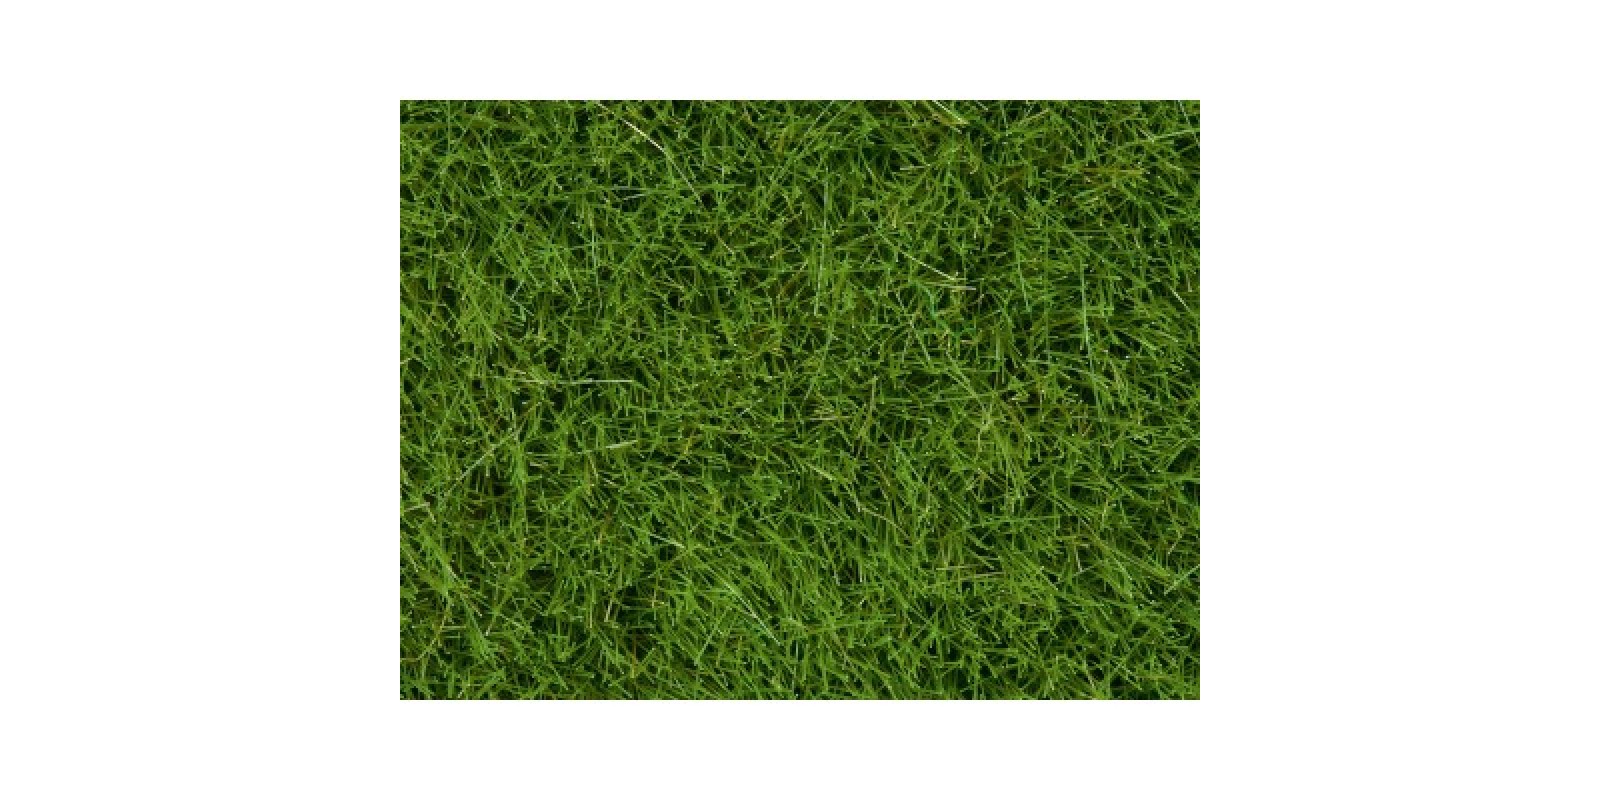 No07093 Wild Grass, bright green, 6 mm 